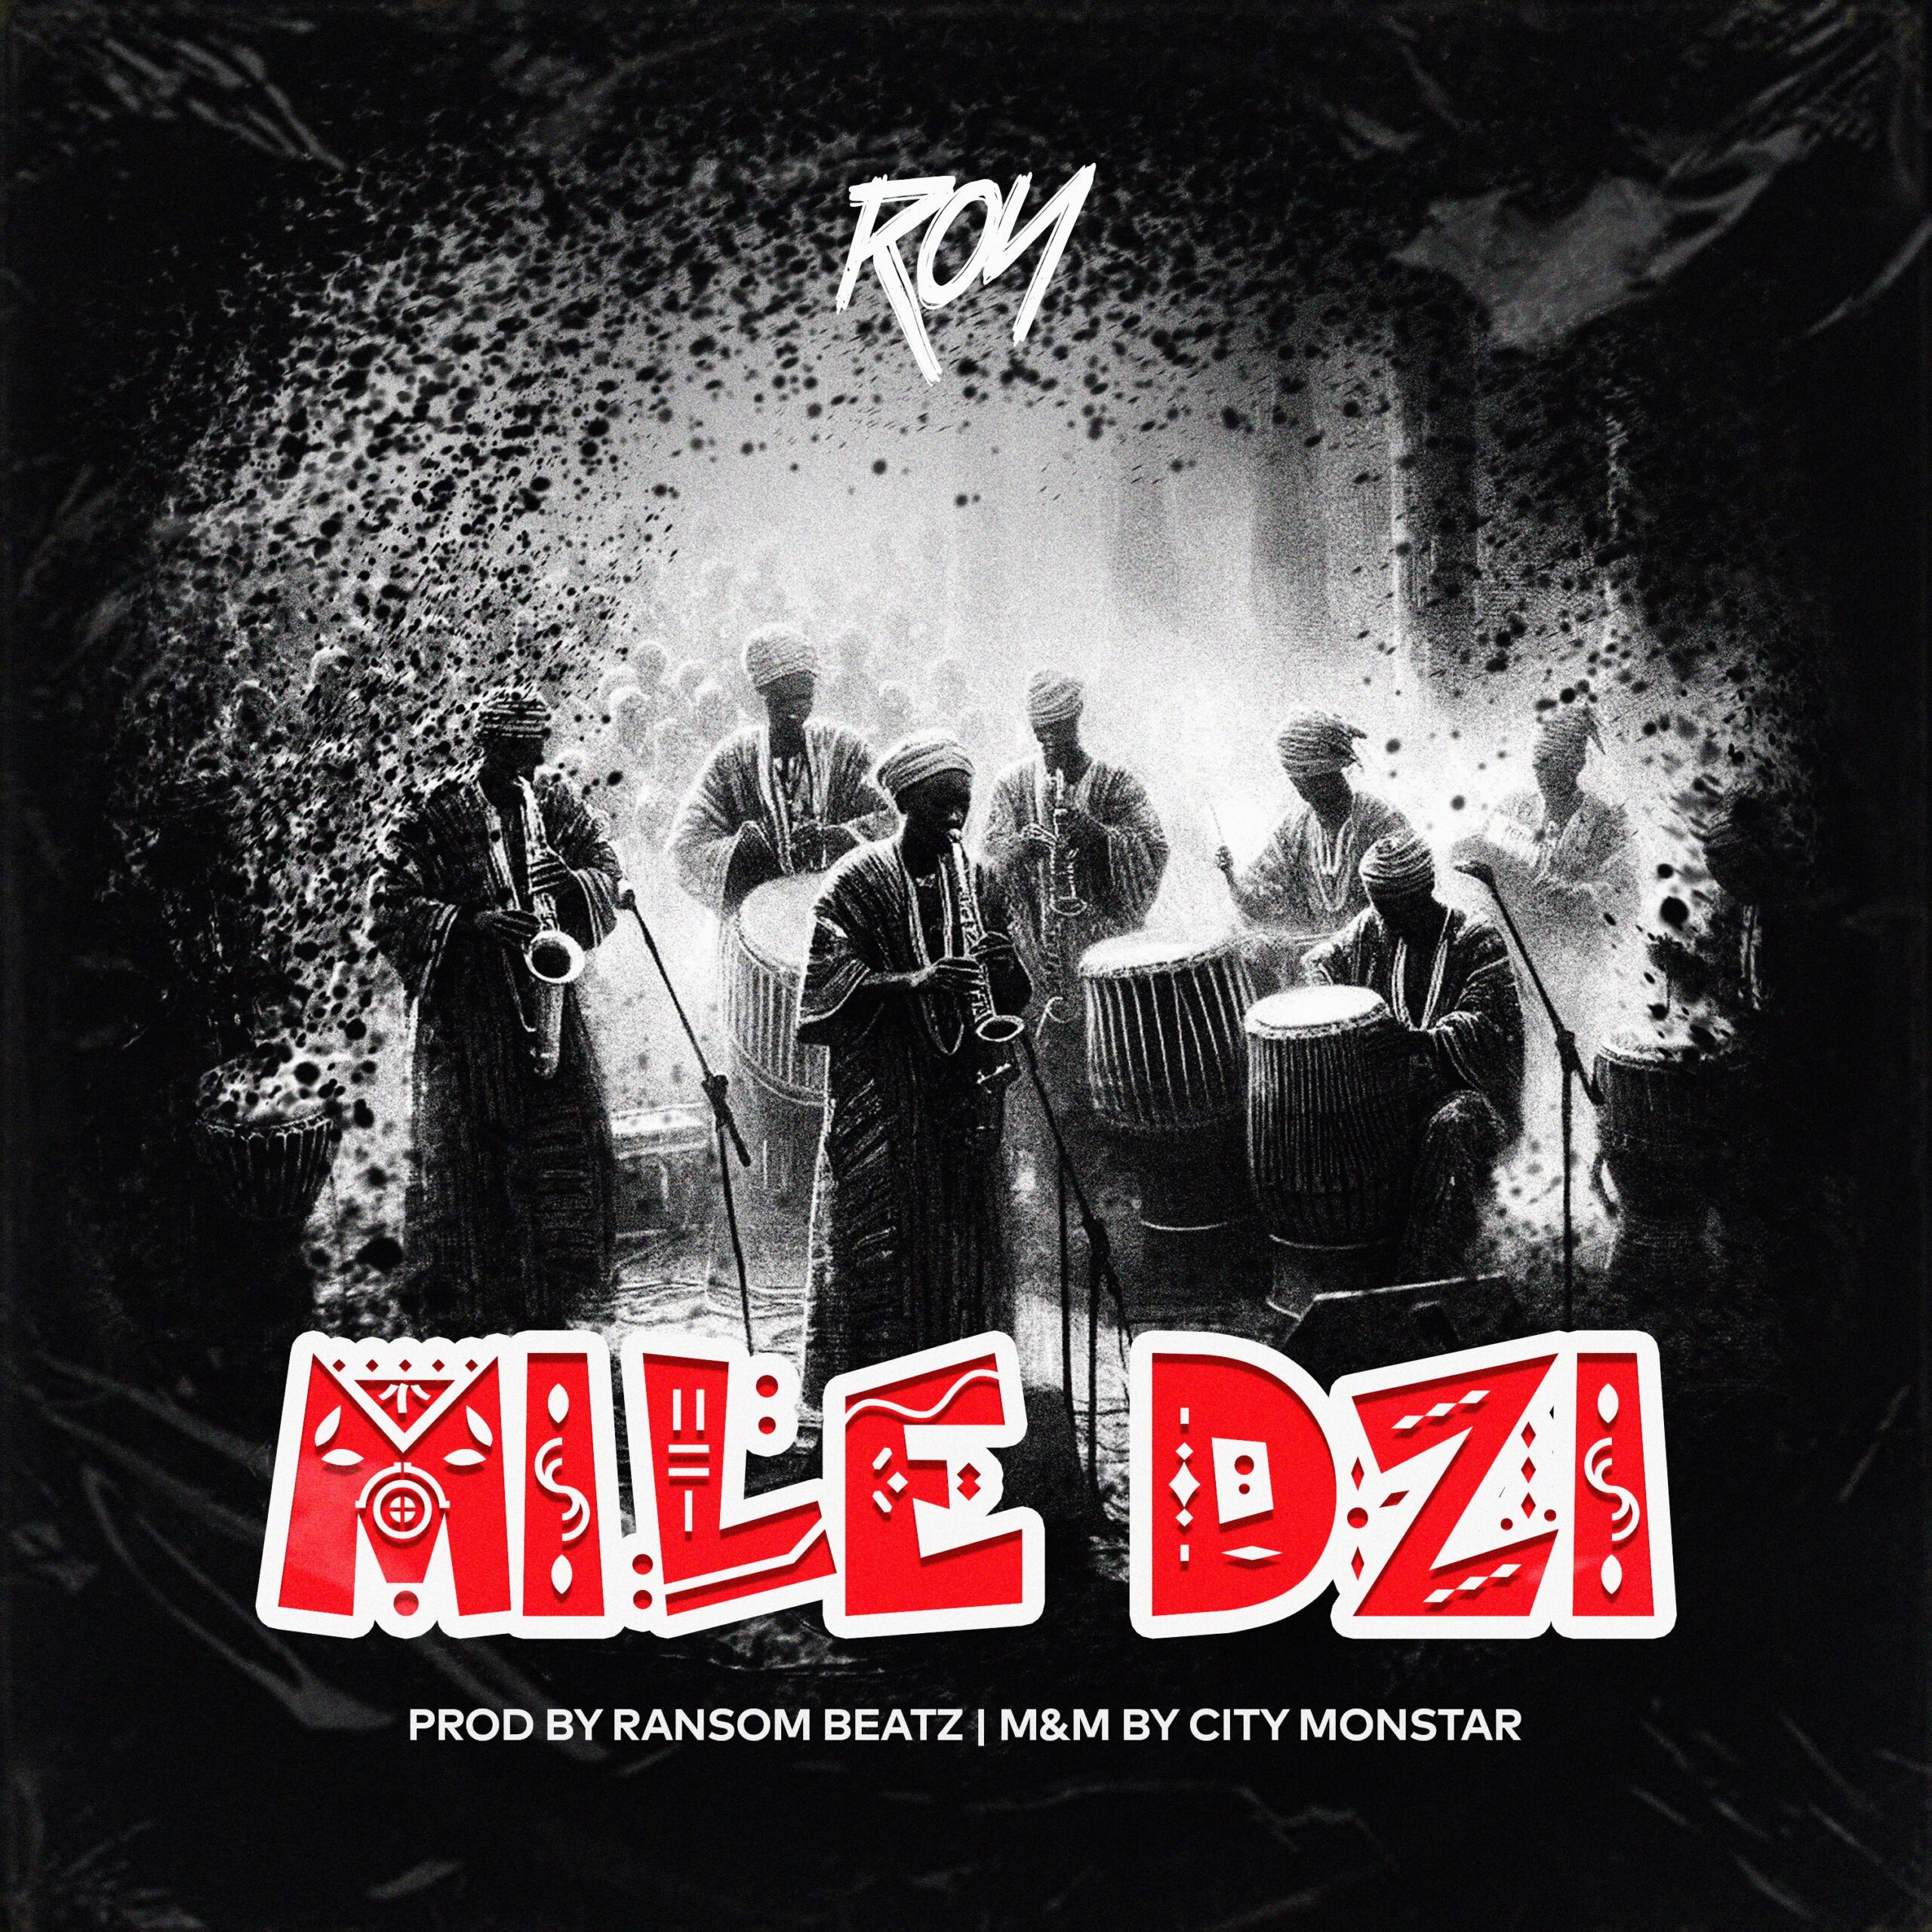 Roy Announces his back, Readies New single "Mile Dzi" drops June 14.